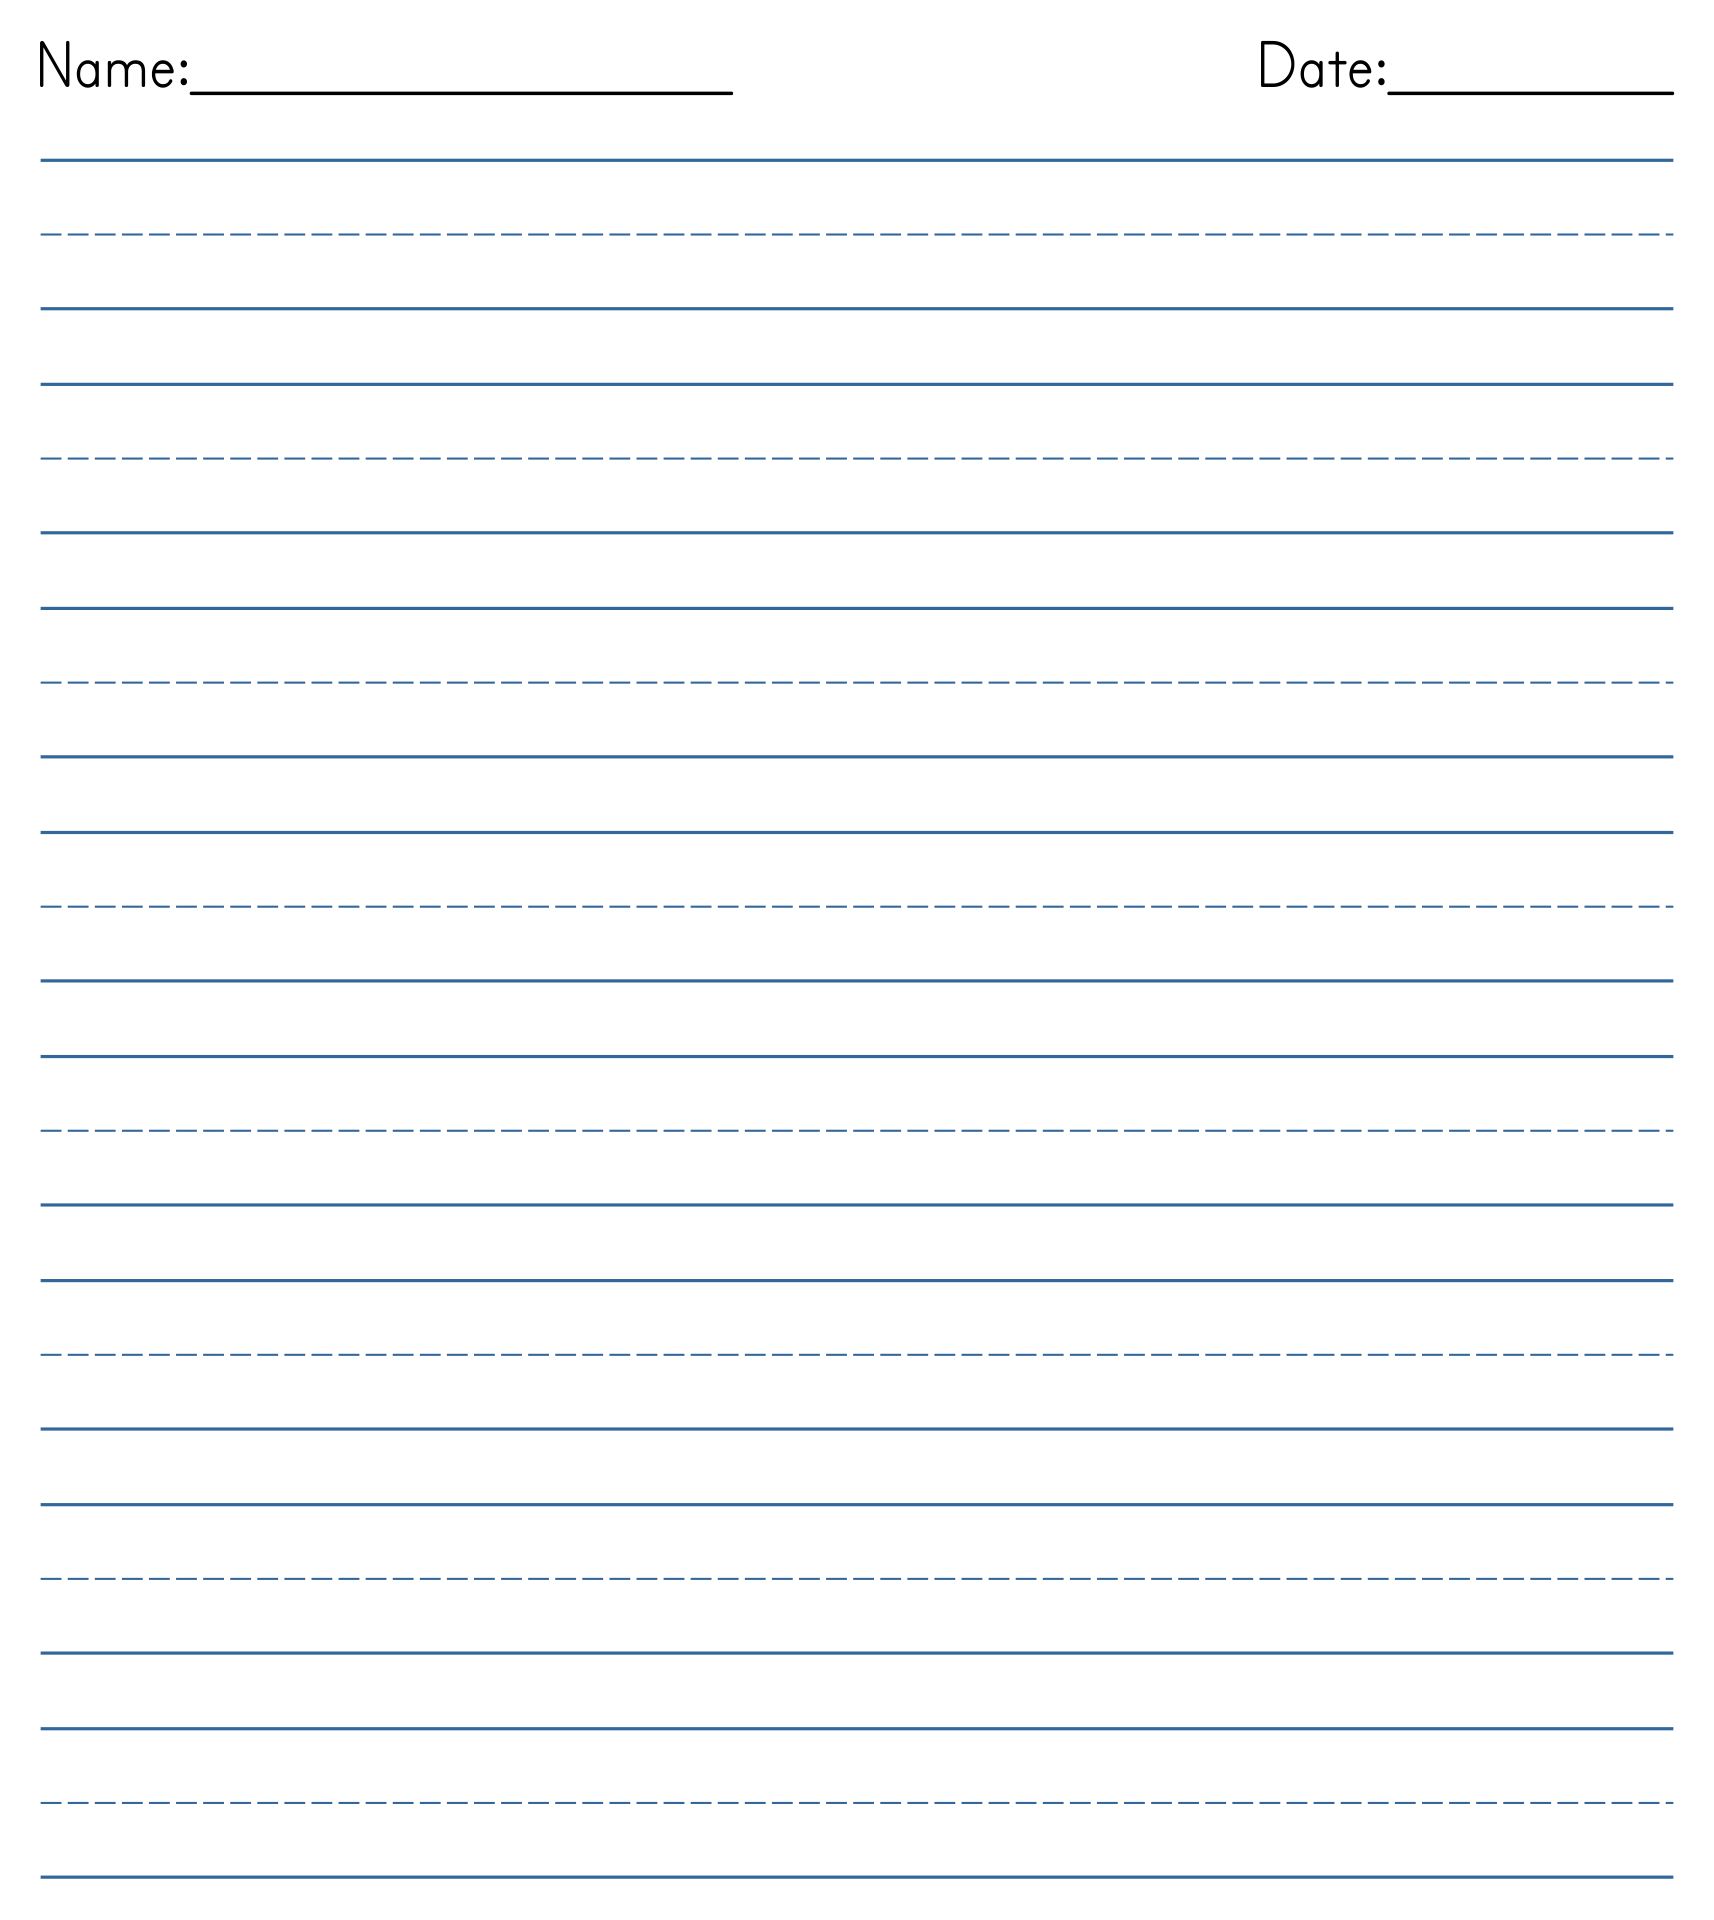 Blank Kindergarten Writing Worksheets